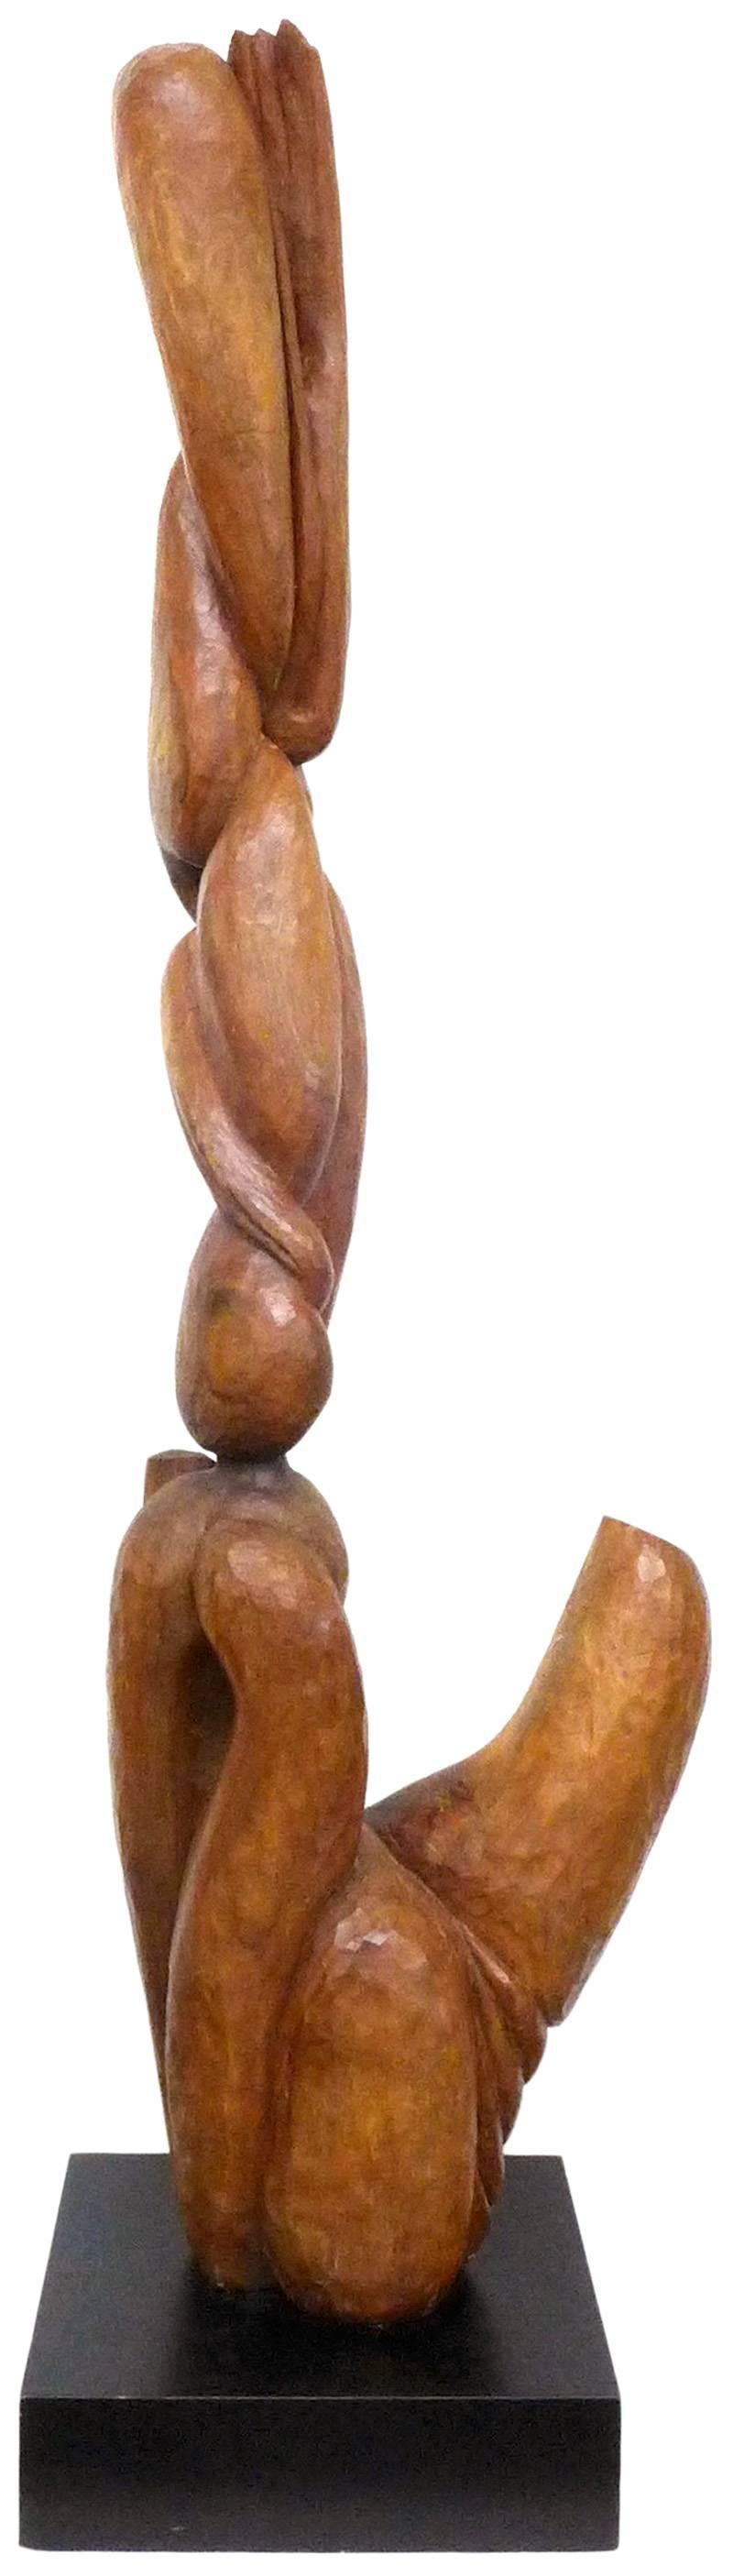 wooden sculpture for sale